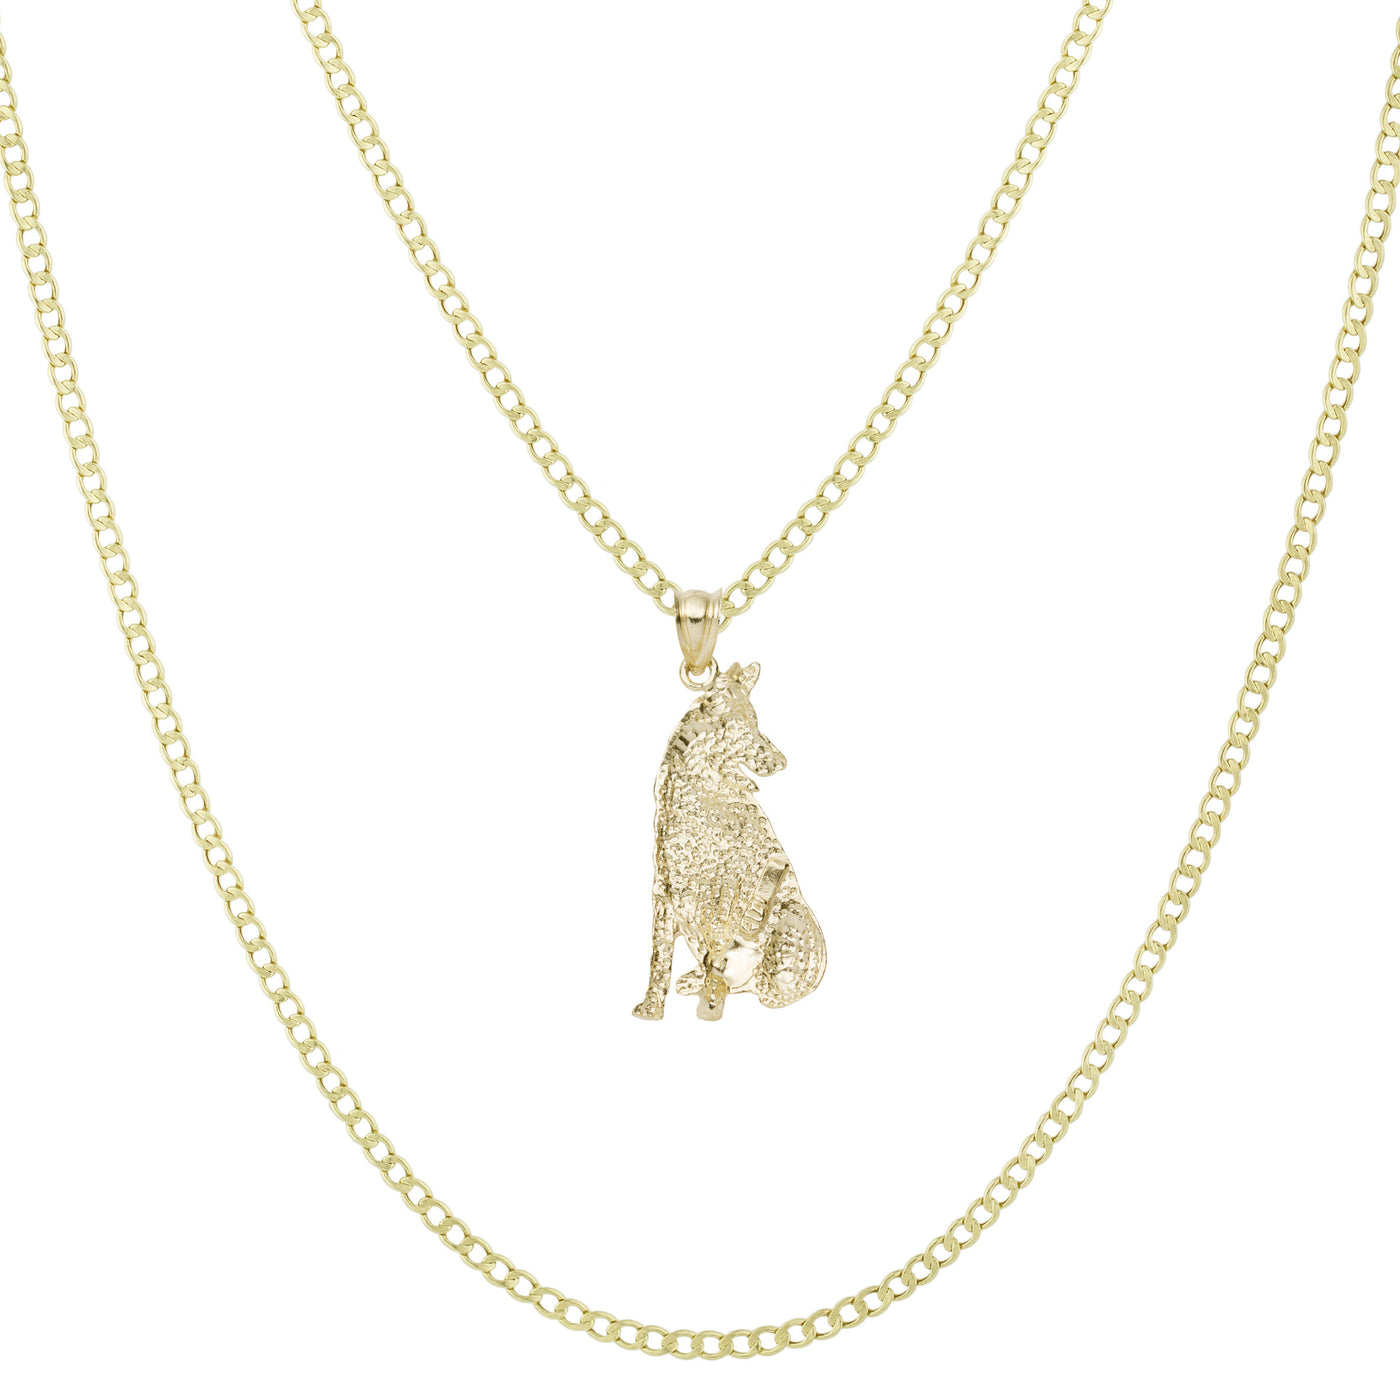 1 3/8" Diamond Cut Wolf Pendant & Chain Necklace Set 10K Yellow Gold